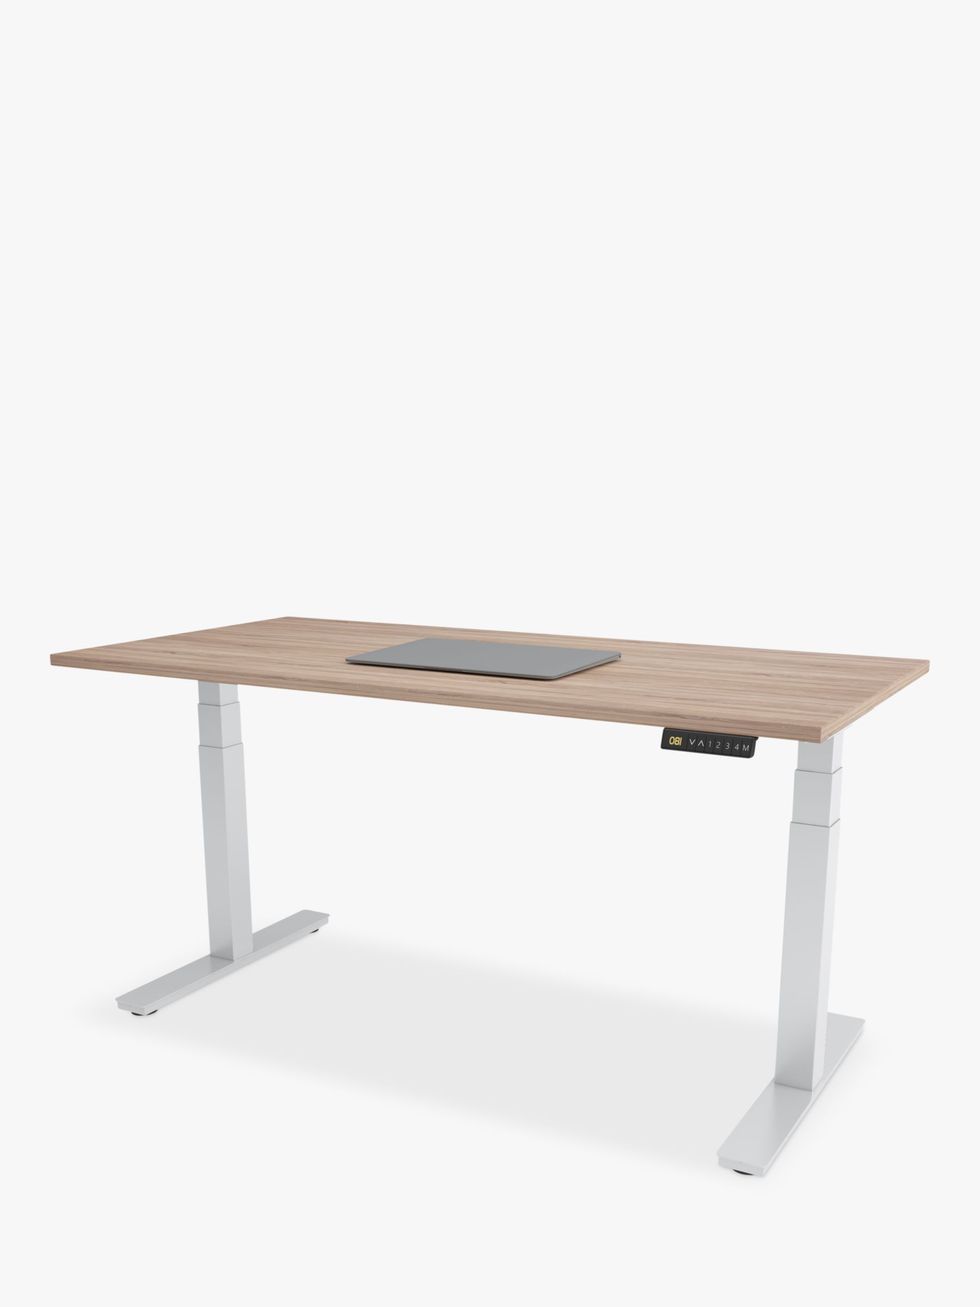 Bisley Sit & Stand Height Adjustable Oak Wood Top Desk, 120cm